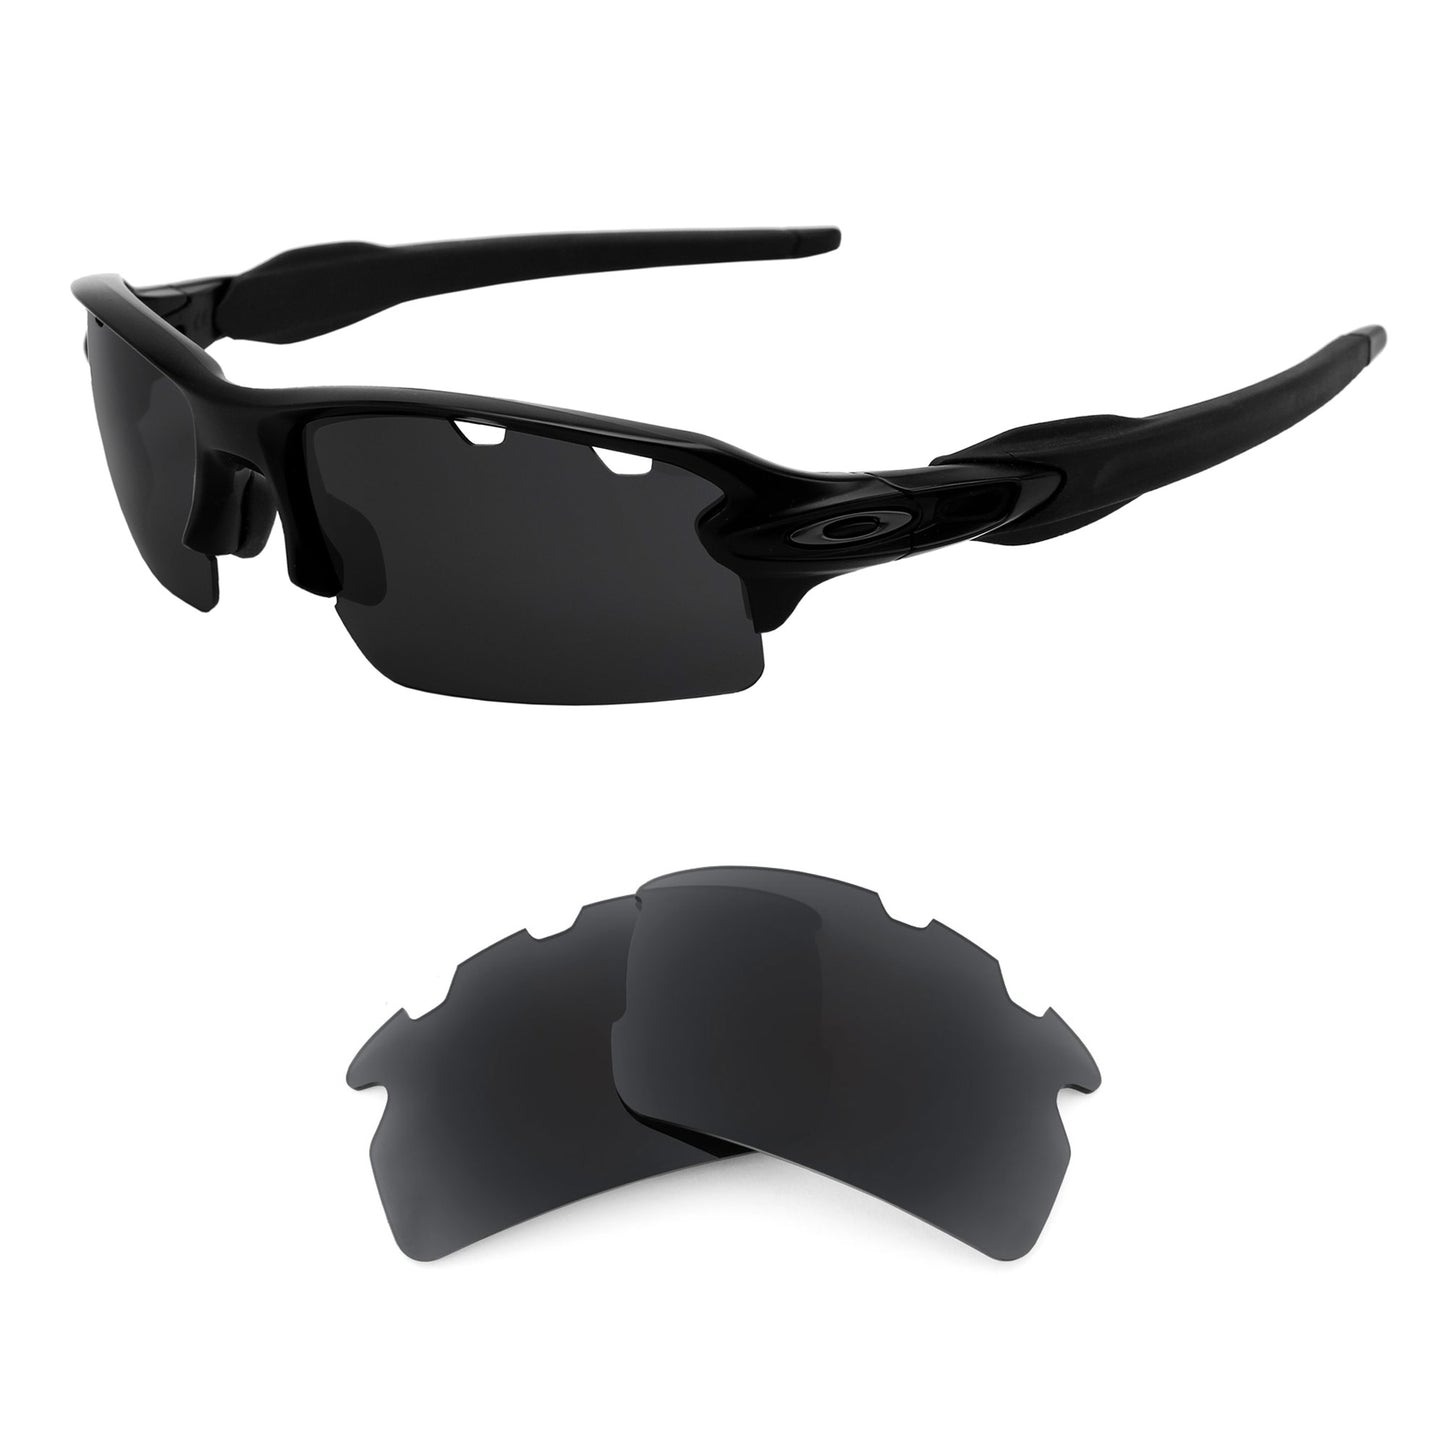 Oakley Flak 2.0 Vented (Low Bridge Fit) sunglasses with replacement lenses